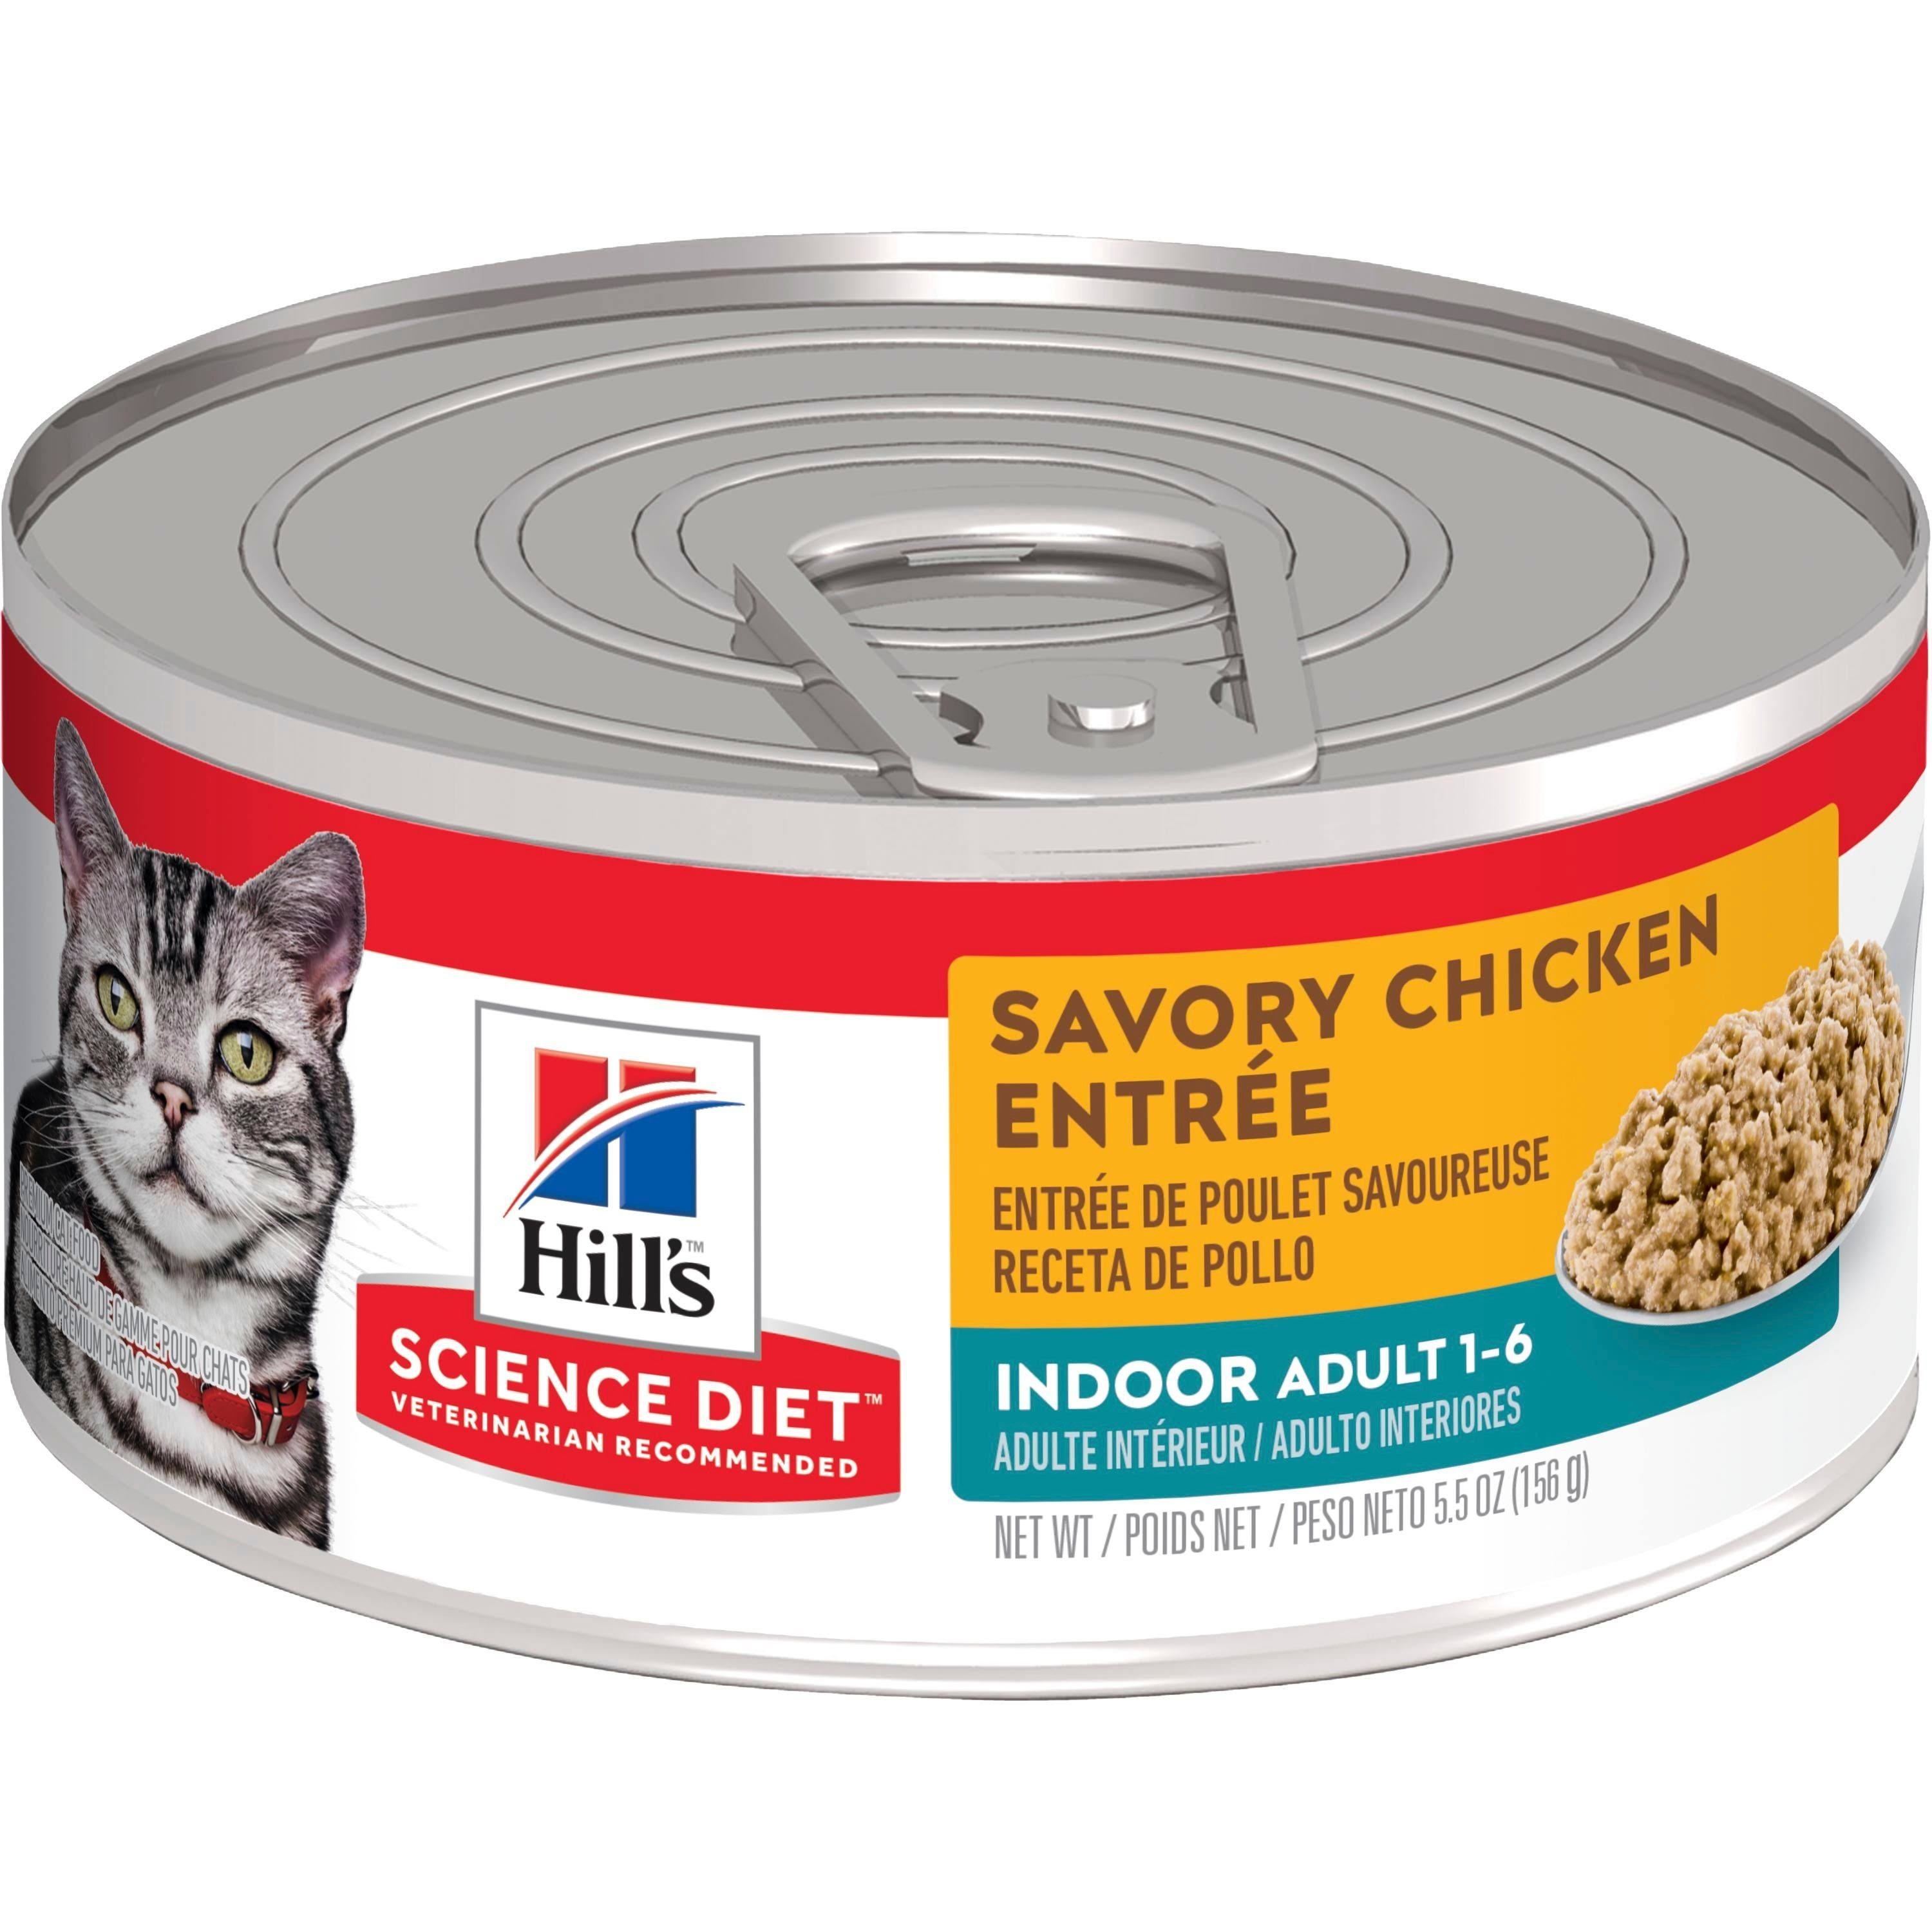 Hill's Science Diet Indoor Minced Premium Cat Food - Savory Chicken Entrée, 5.5oz